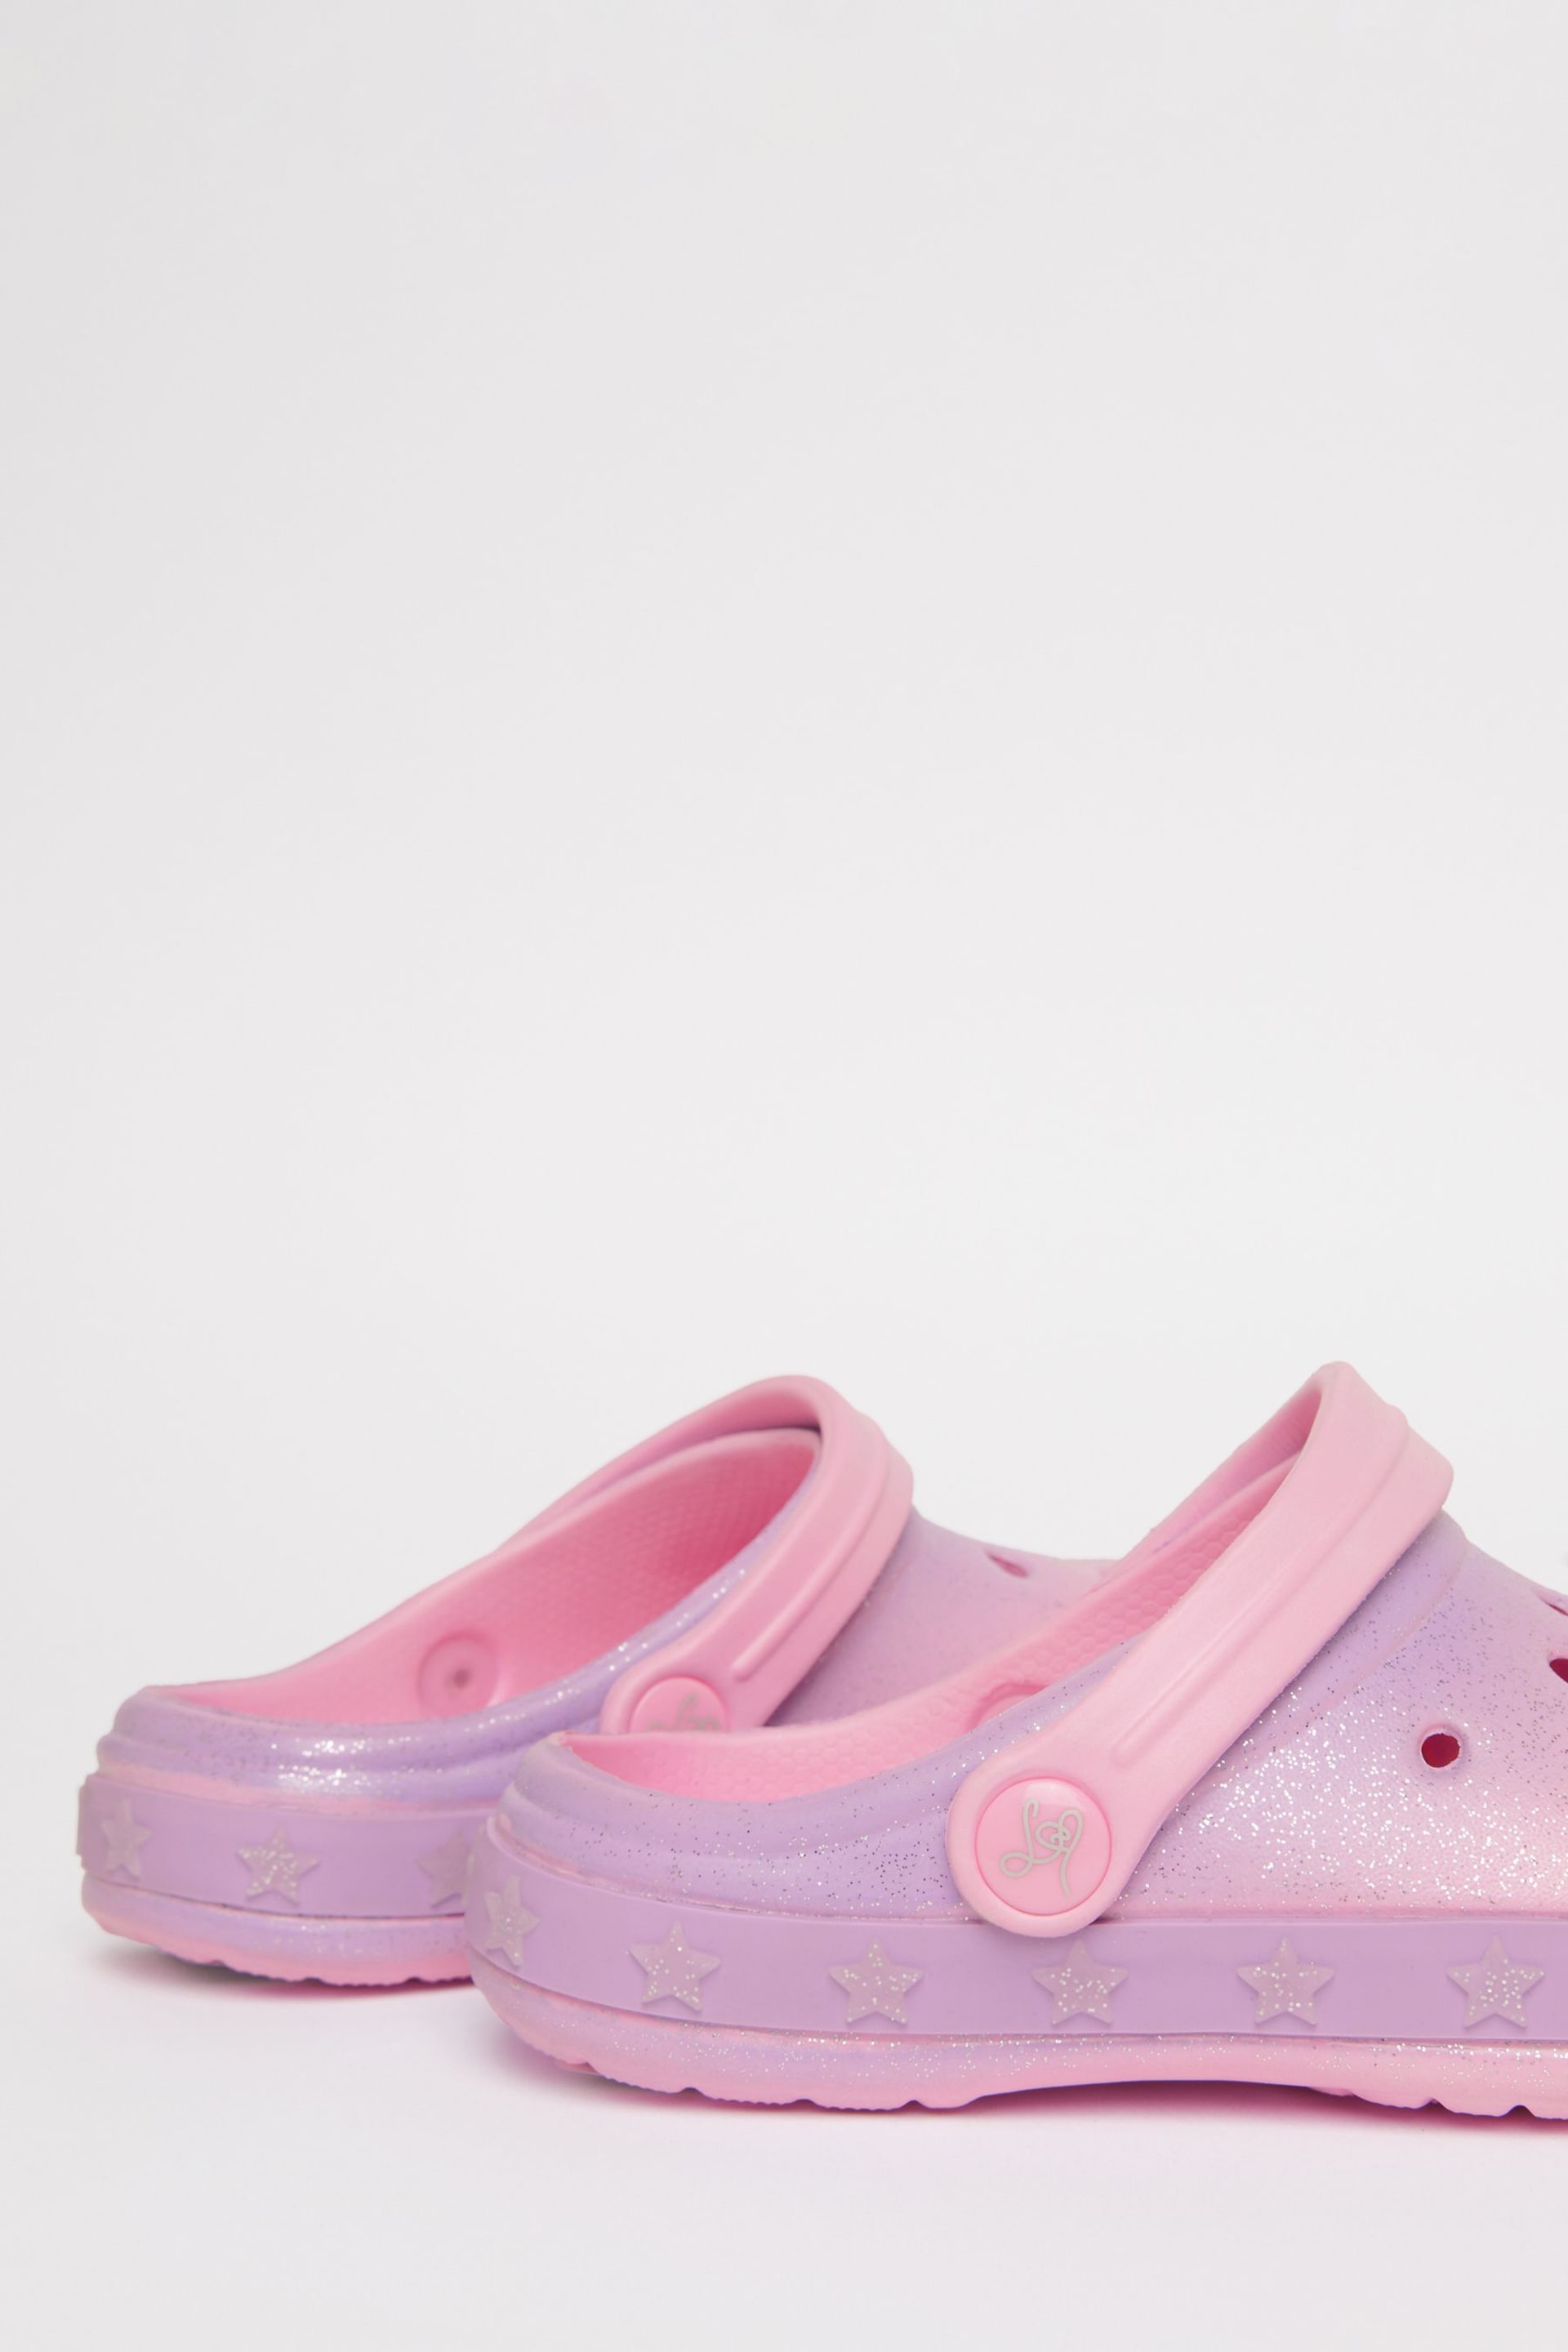 Lipsy Pink Slip On Glitter Clog Sandals - Image 4 of 4